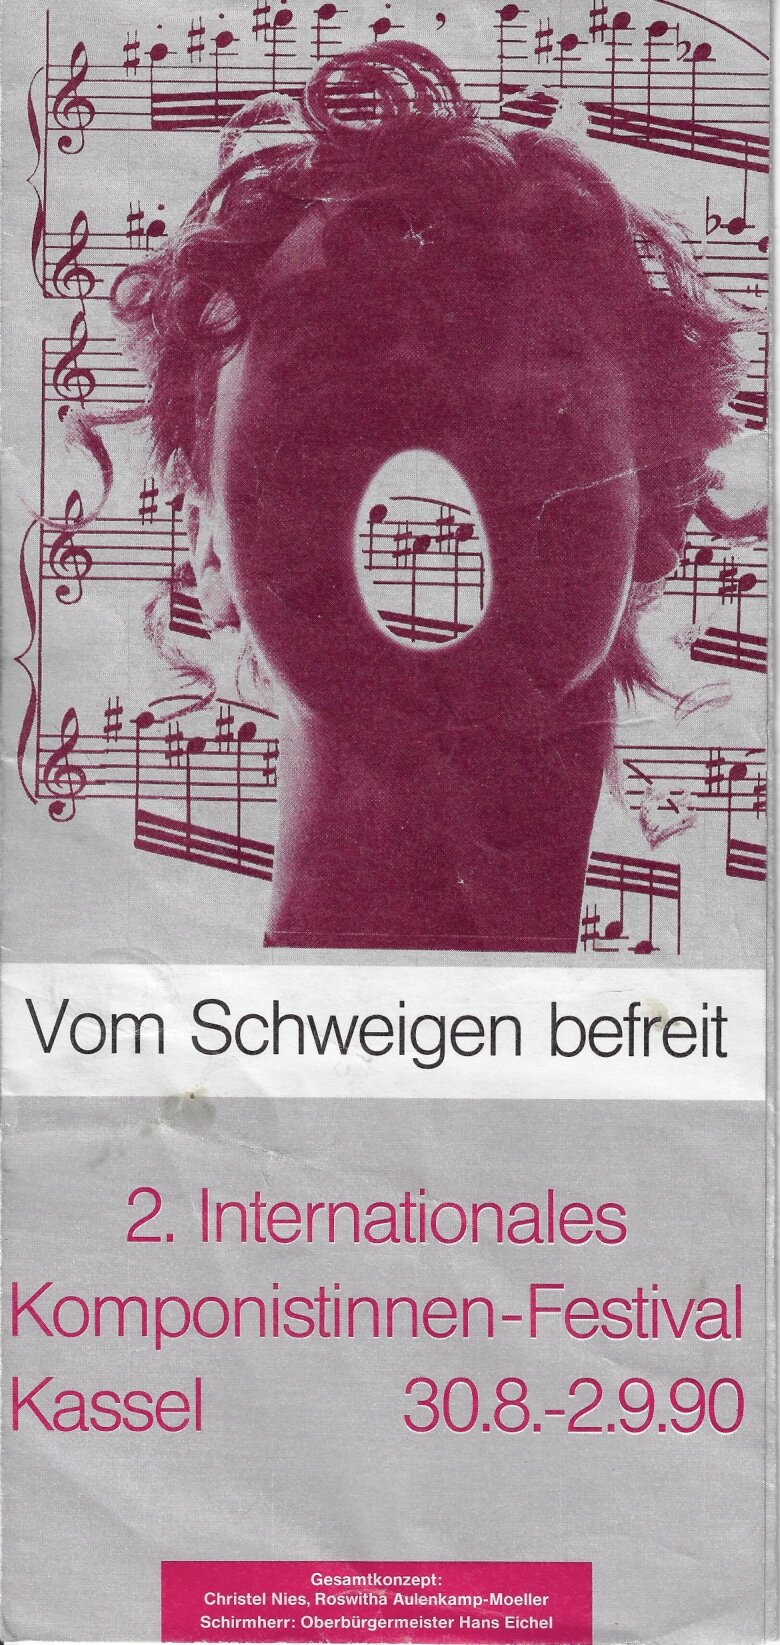 Internationales Komponistinnen-Festival_Kassel,Germany '90.jpg